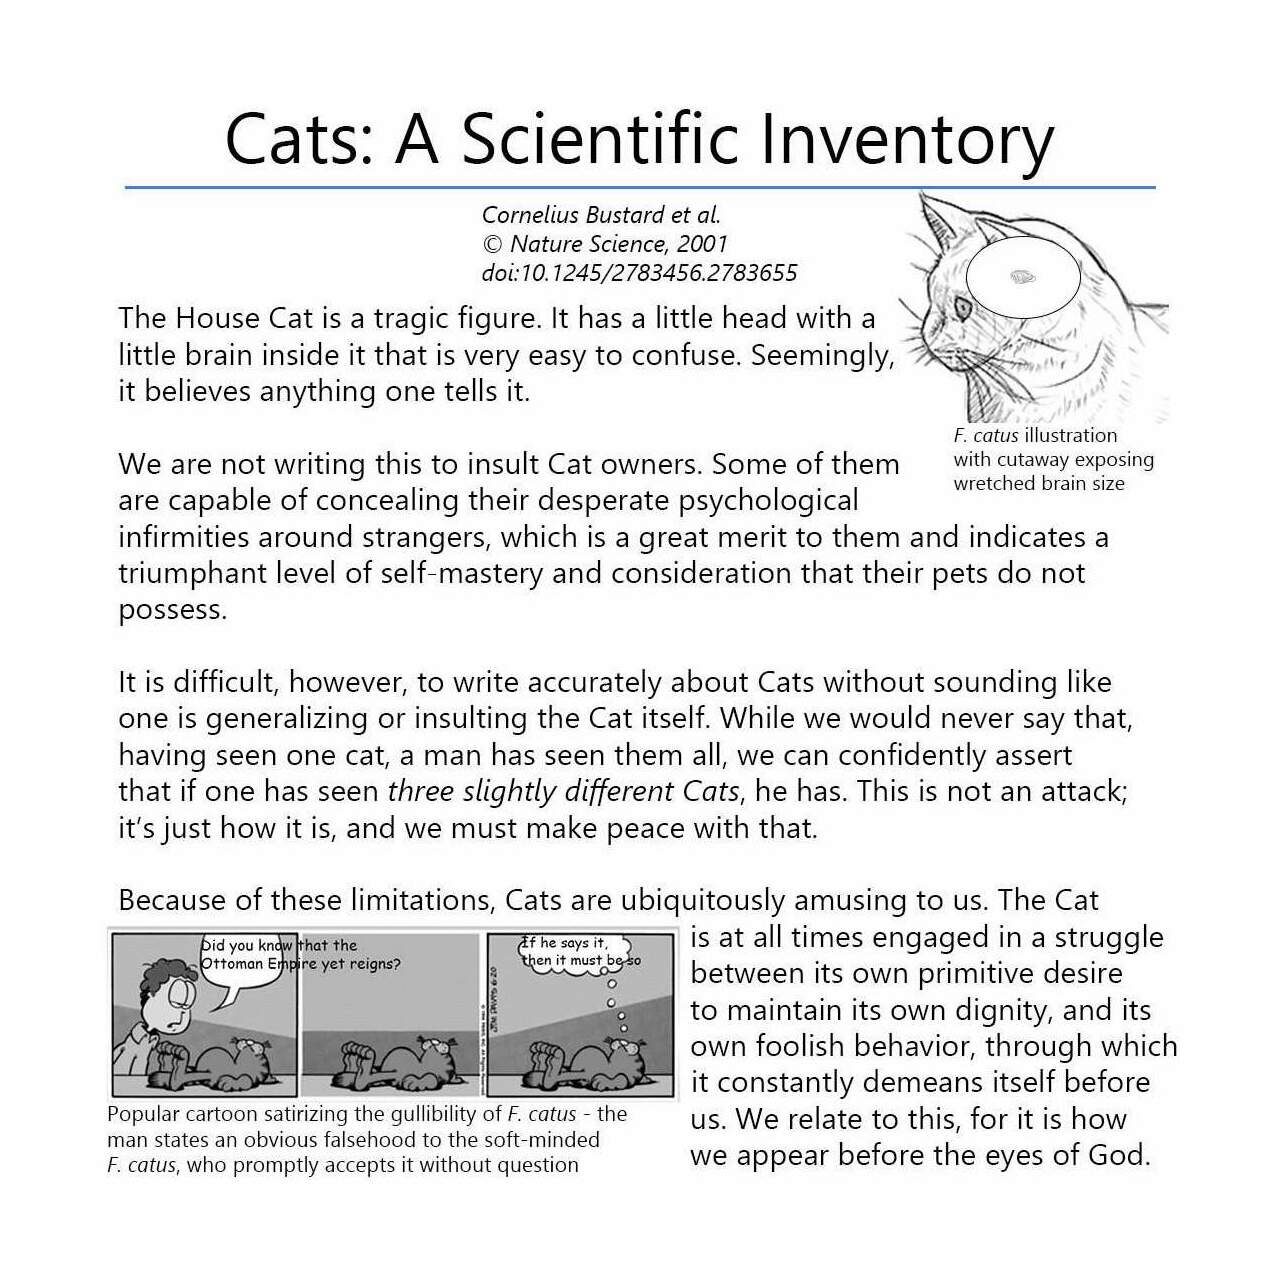 “Cats: A Scientific Inventory”